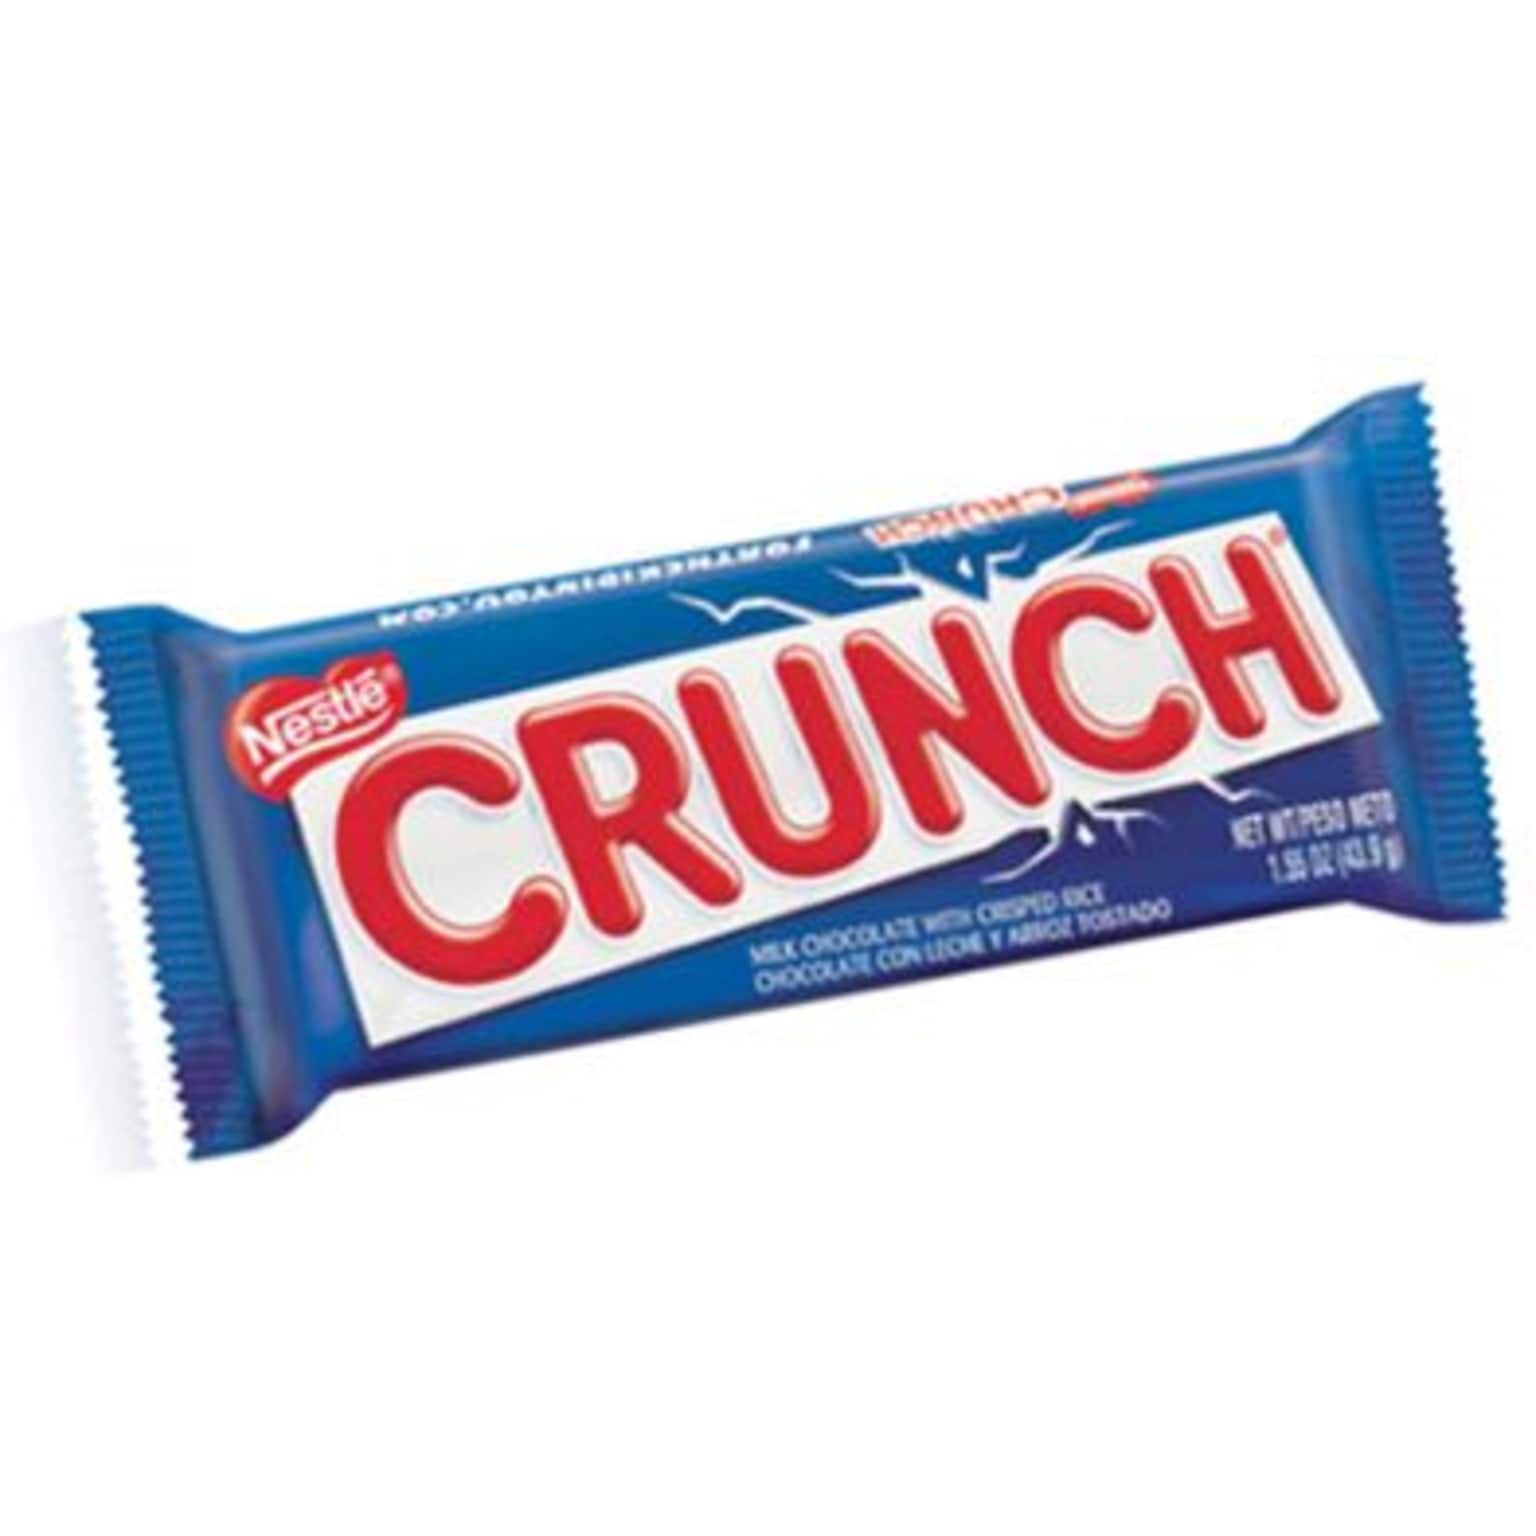 Nestle Crunch Milk Chocolate Candy Bar, 1.55 oz., 36/Box (209-00164)